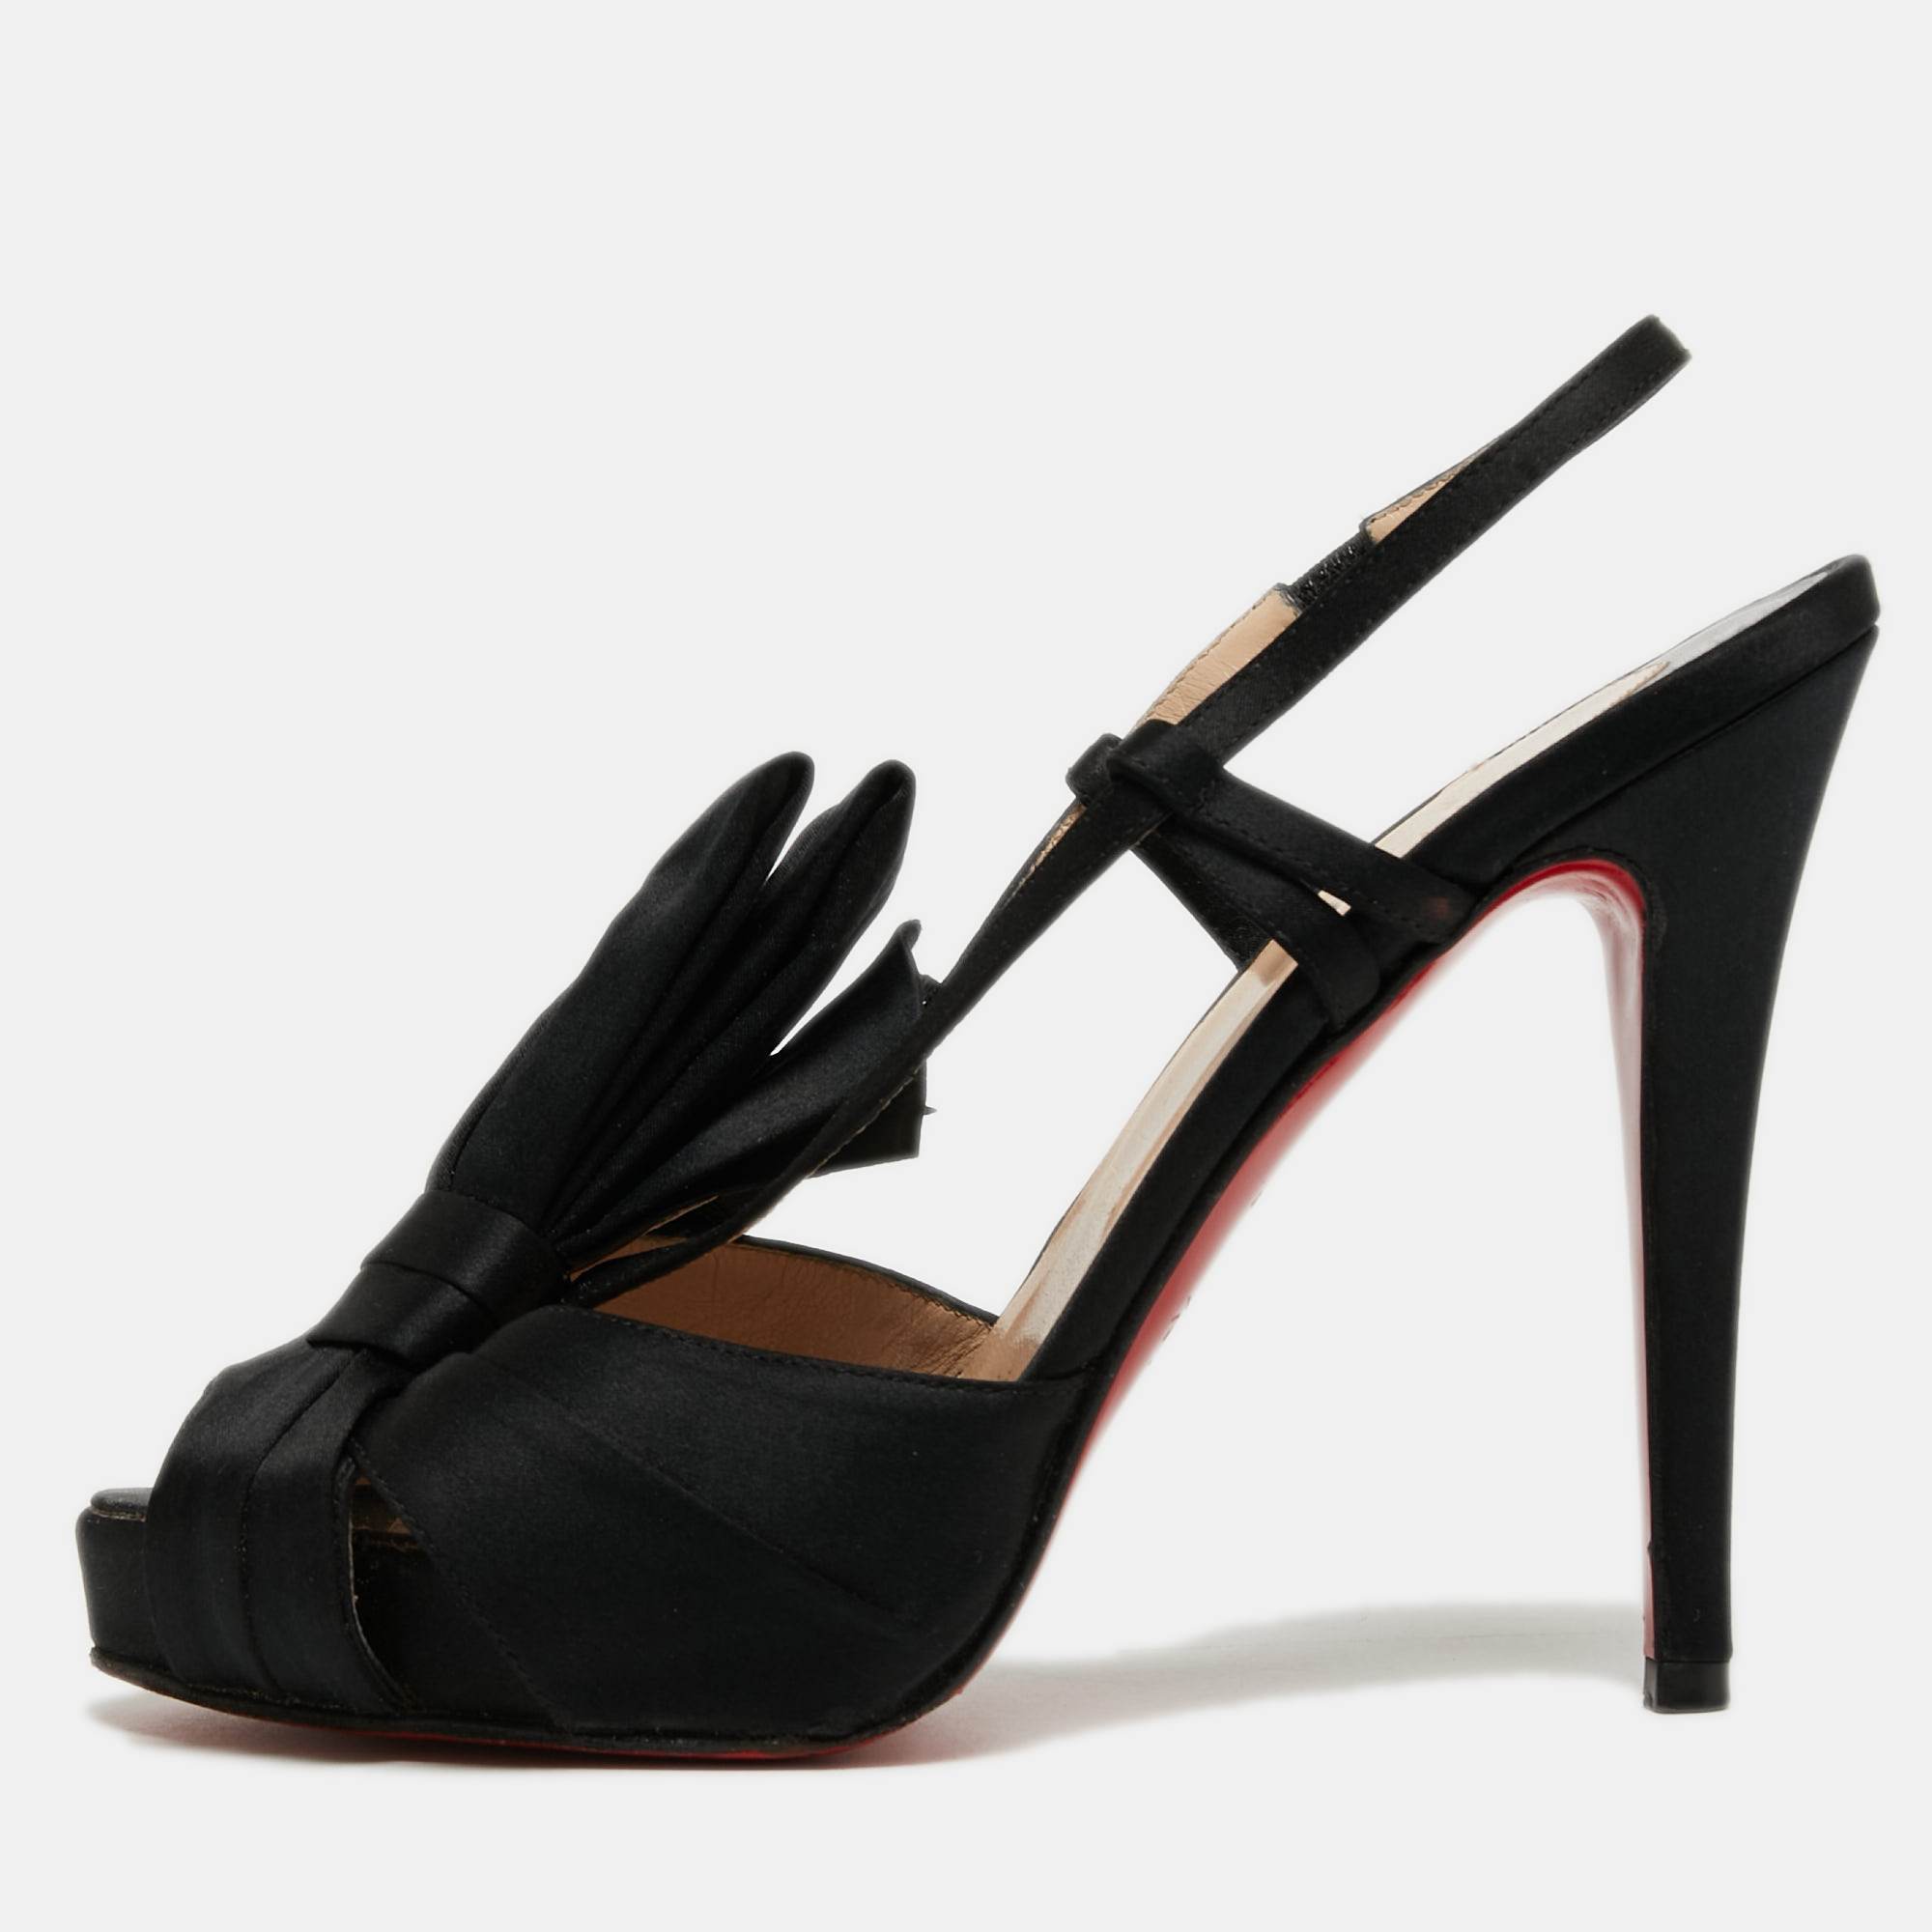 Christian louboutin black satin bow slingback sandals size 37.5